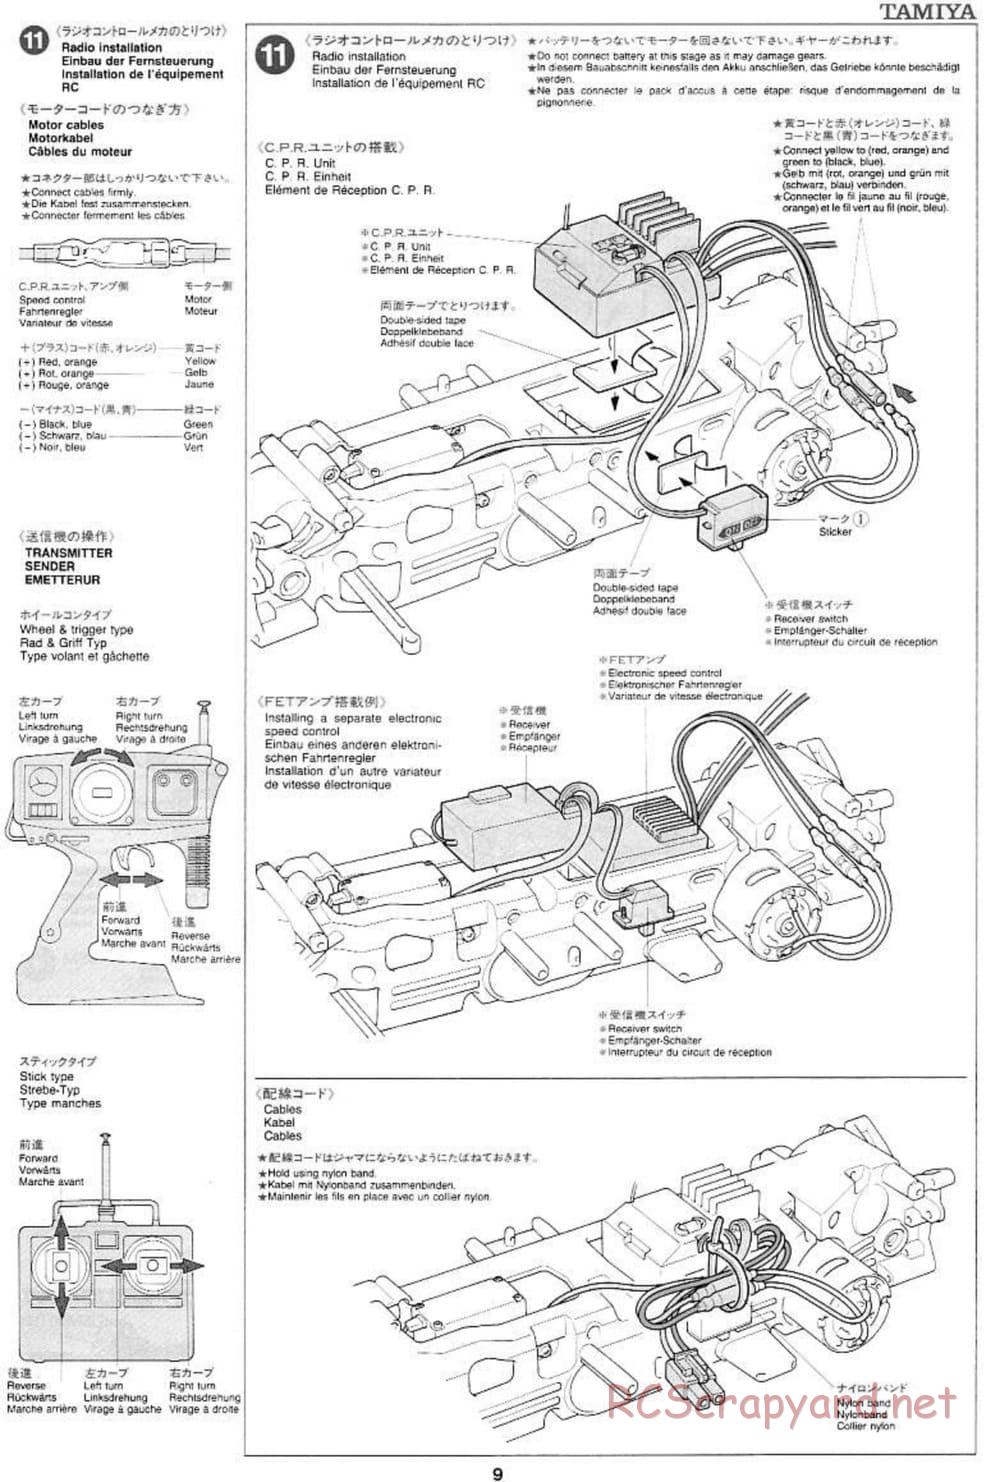 Tamiya - Subaru Impreza WRC - TL-01 Chassis - Manual - Page 9